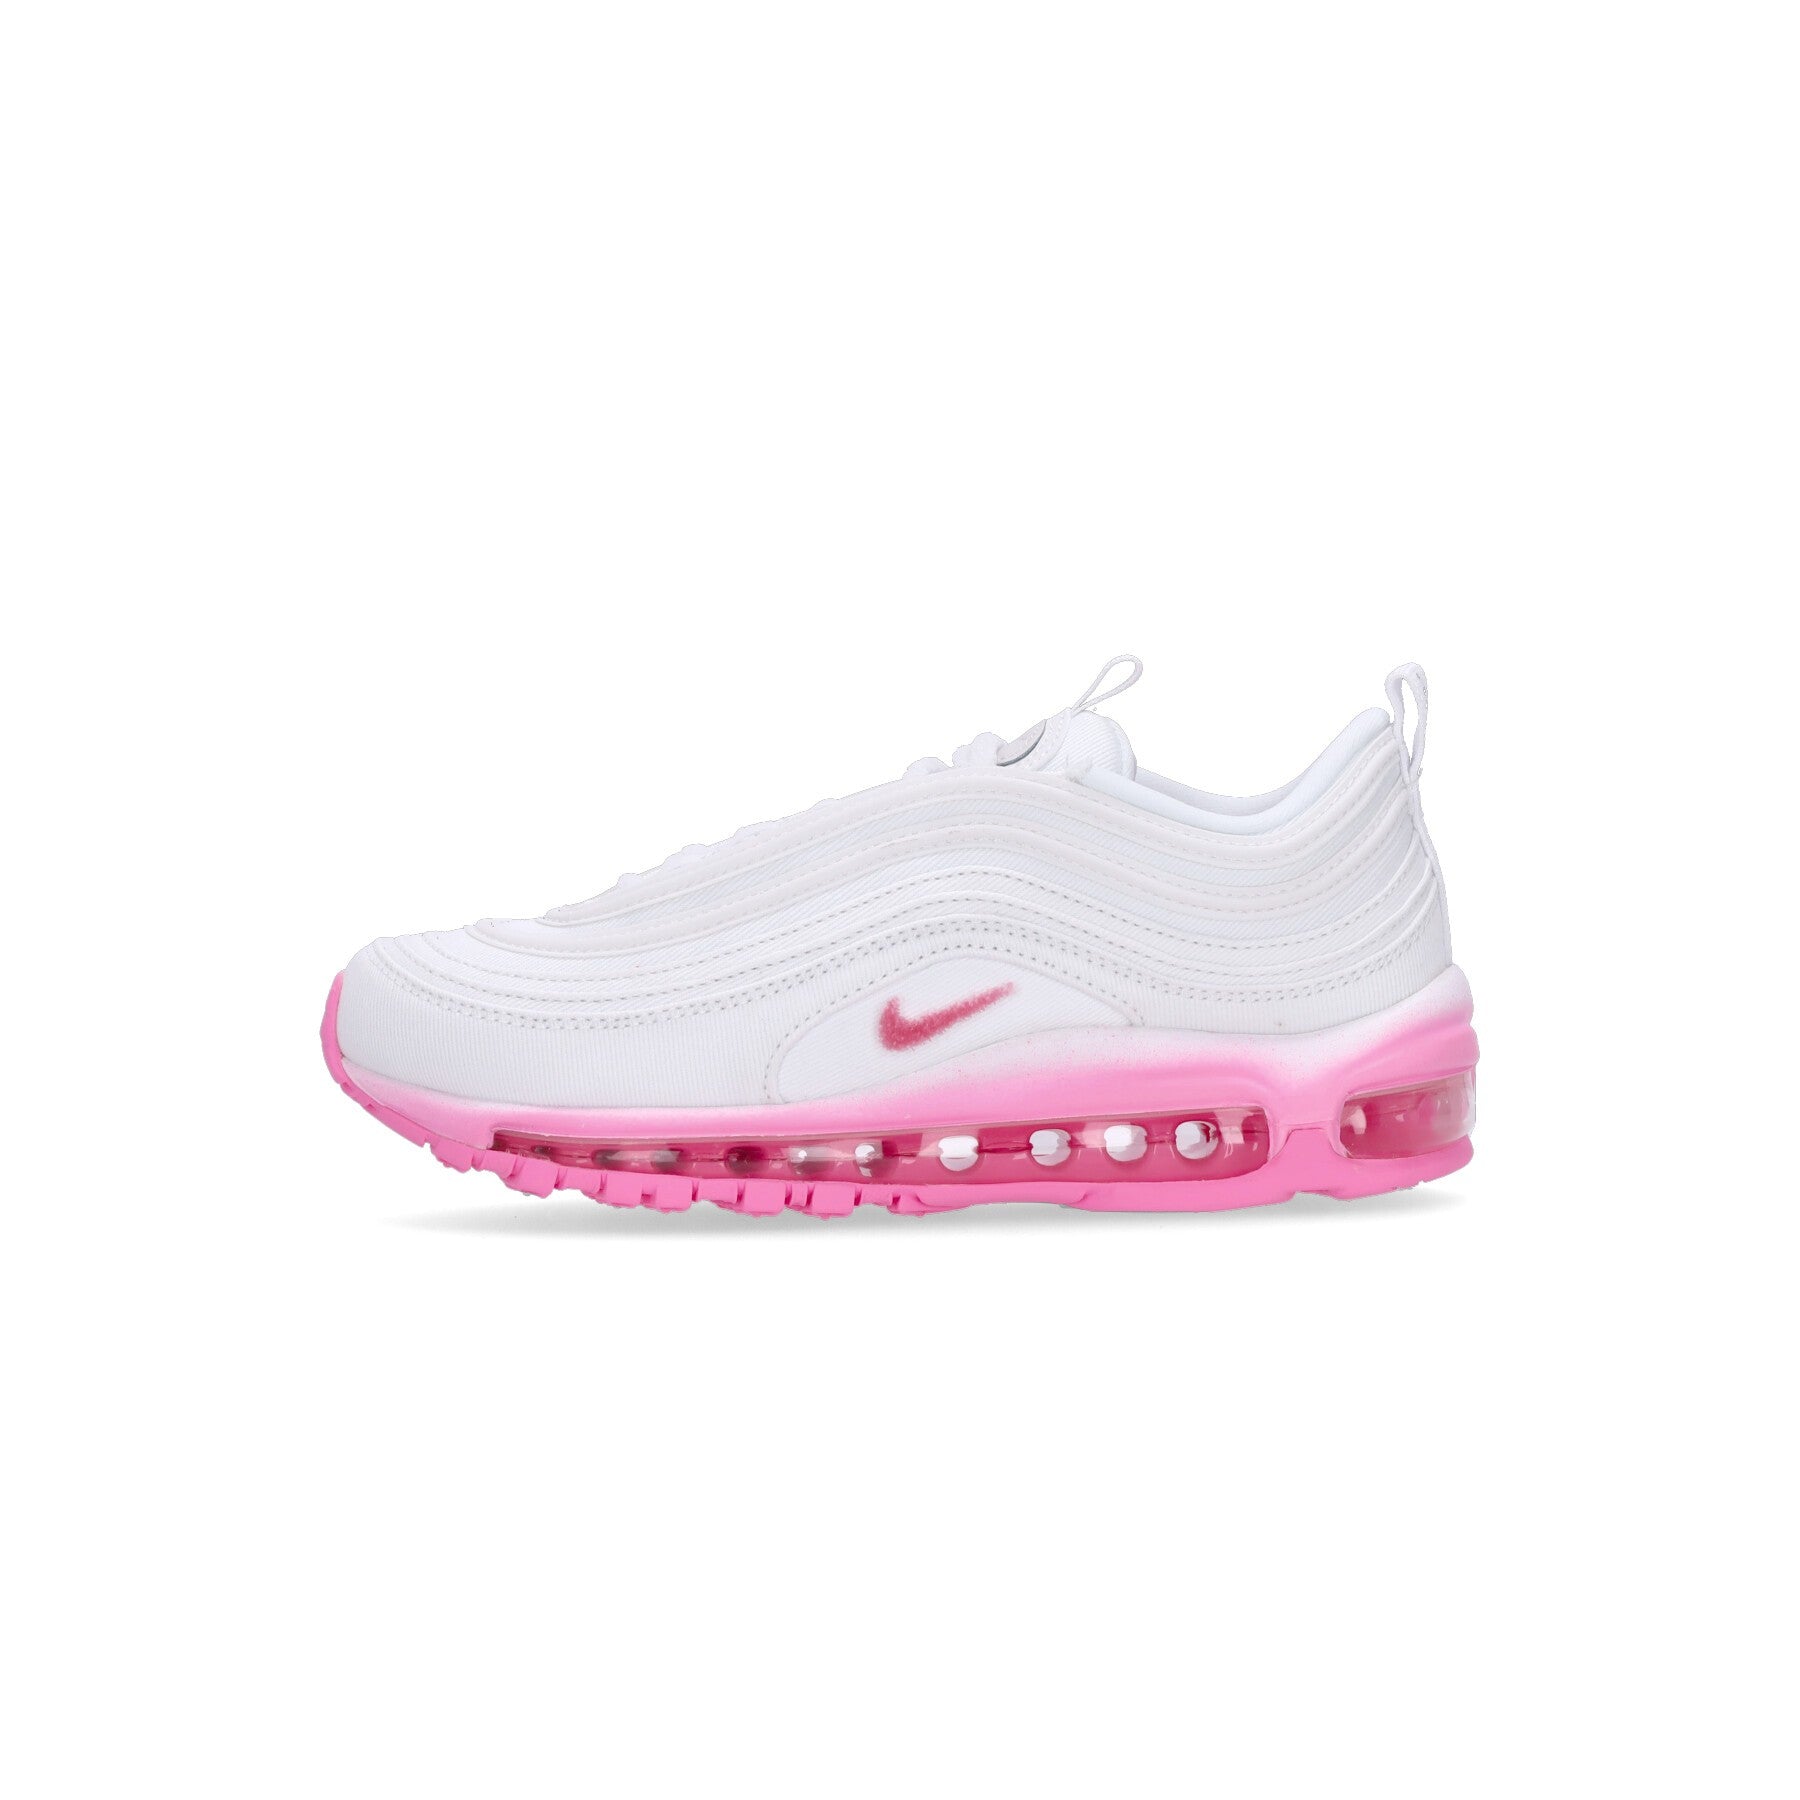 Nike, Scarpa Bassa Donna W Air Max 97 Se, White/pink Spell/pink Foam